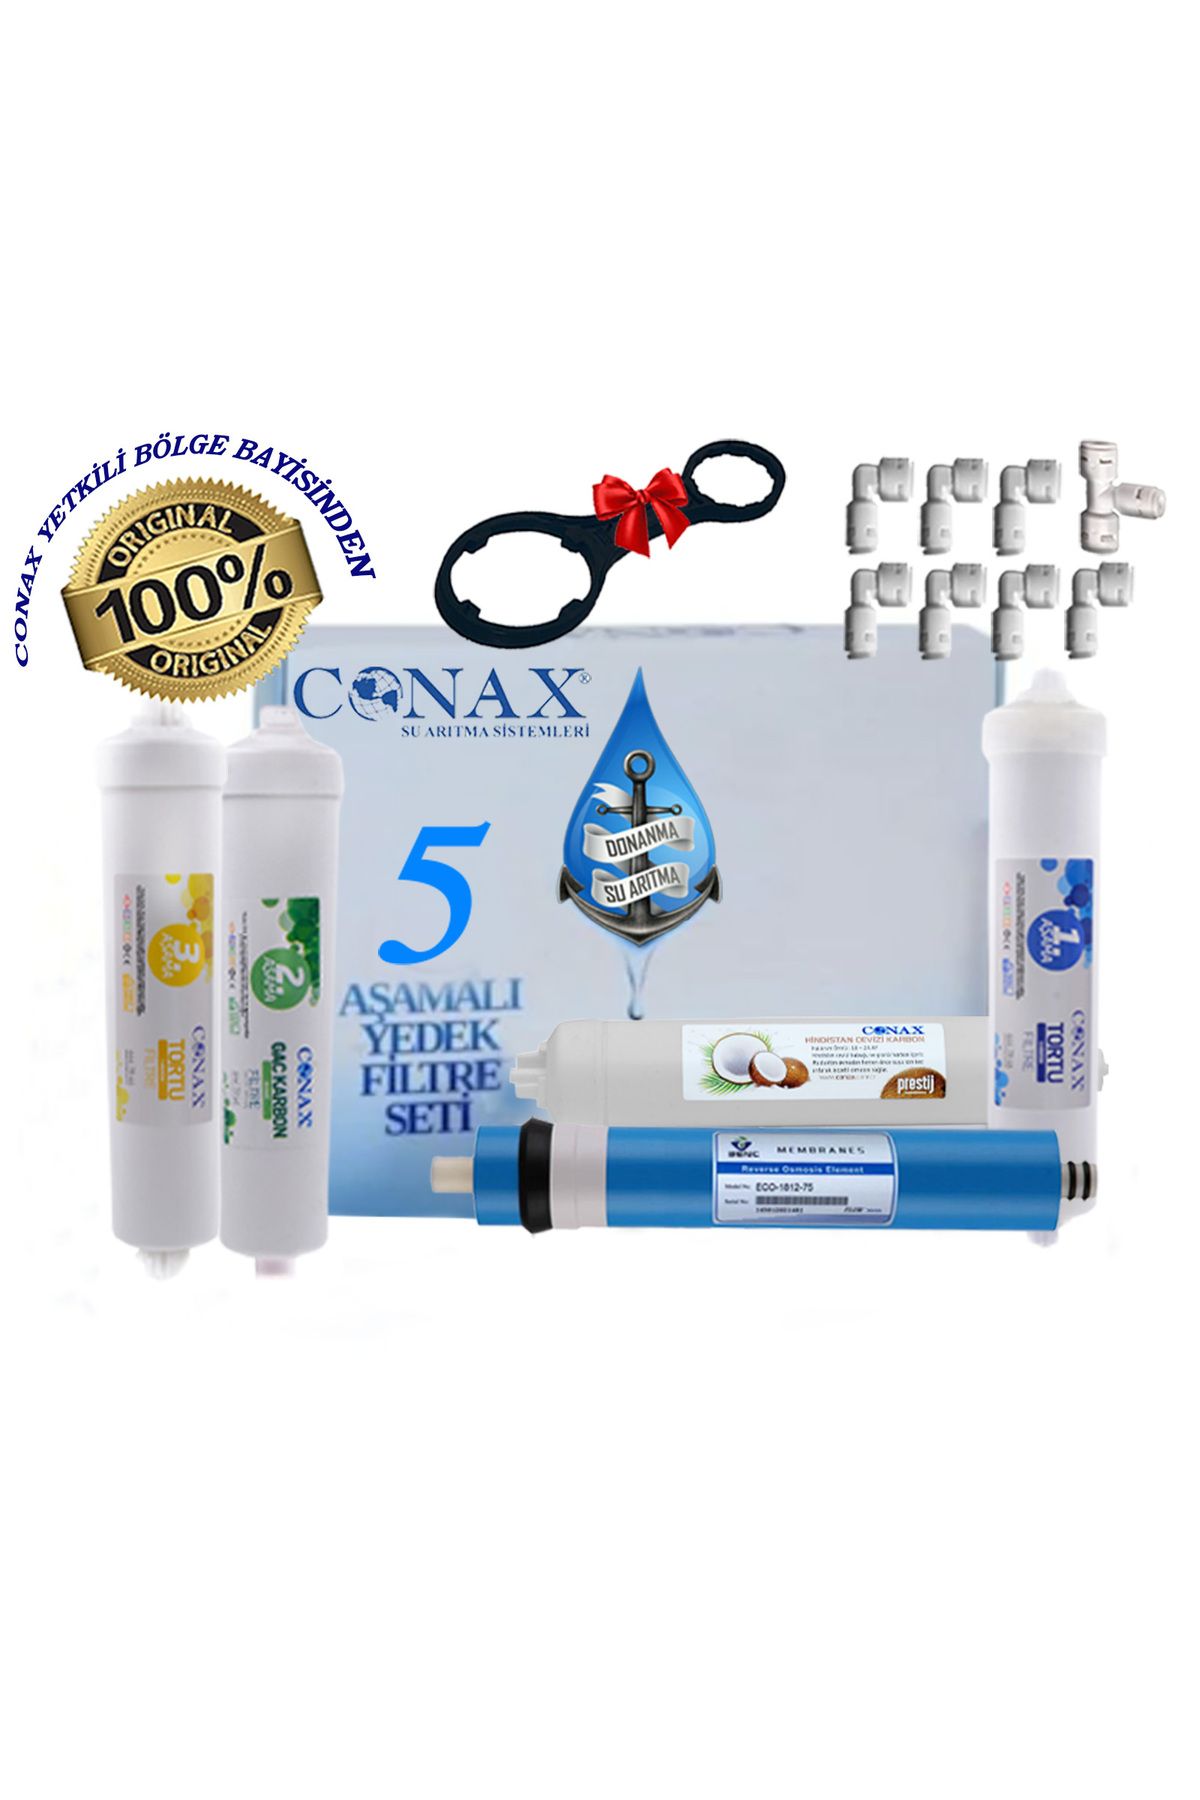 Conax Kapalı Kasa 5 Li (5 AŞAMALI) Filtre Seti Benc Membranlı